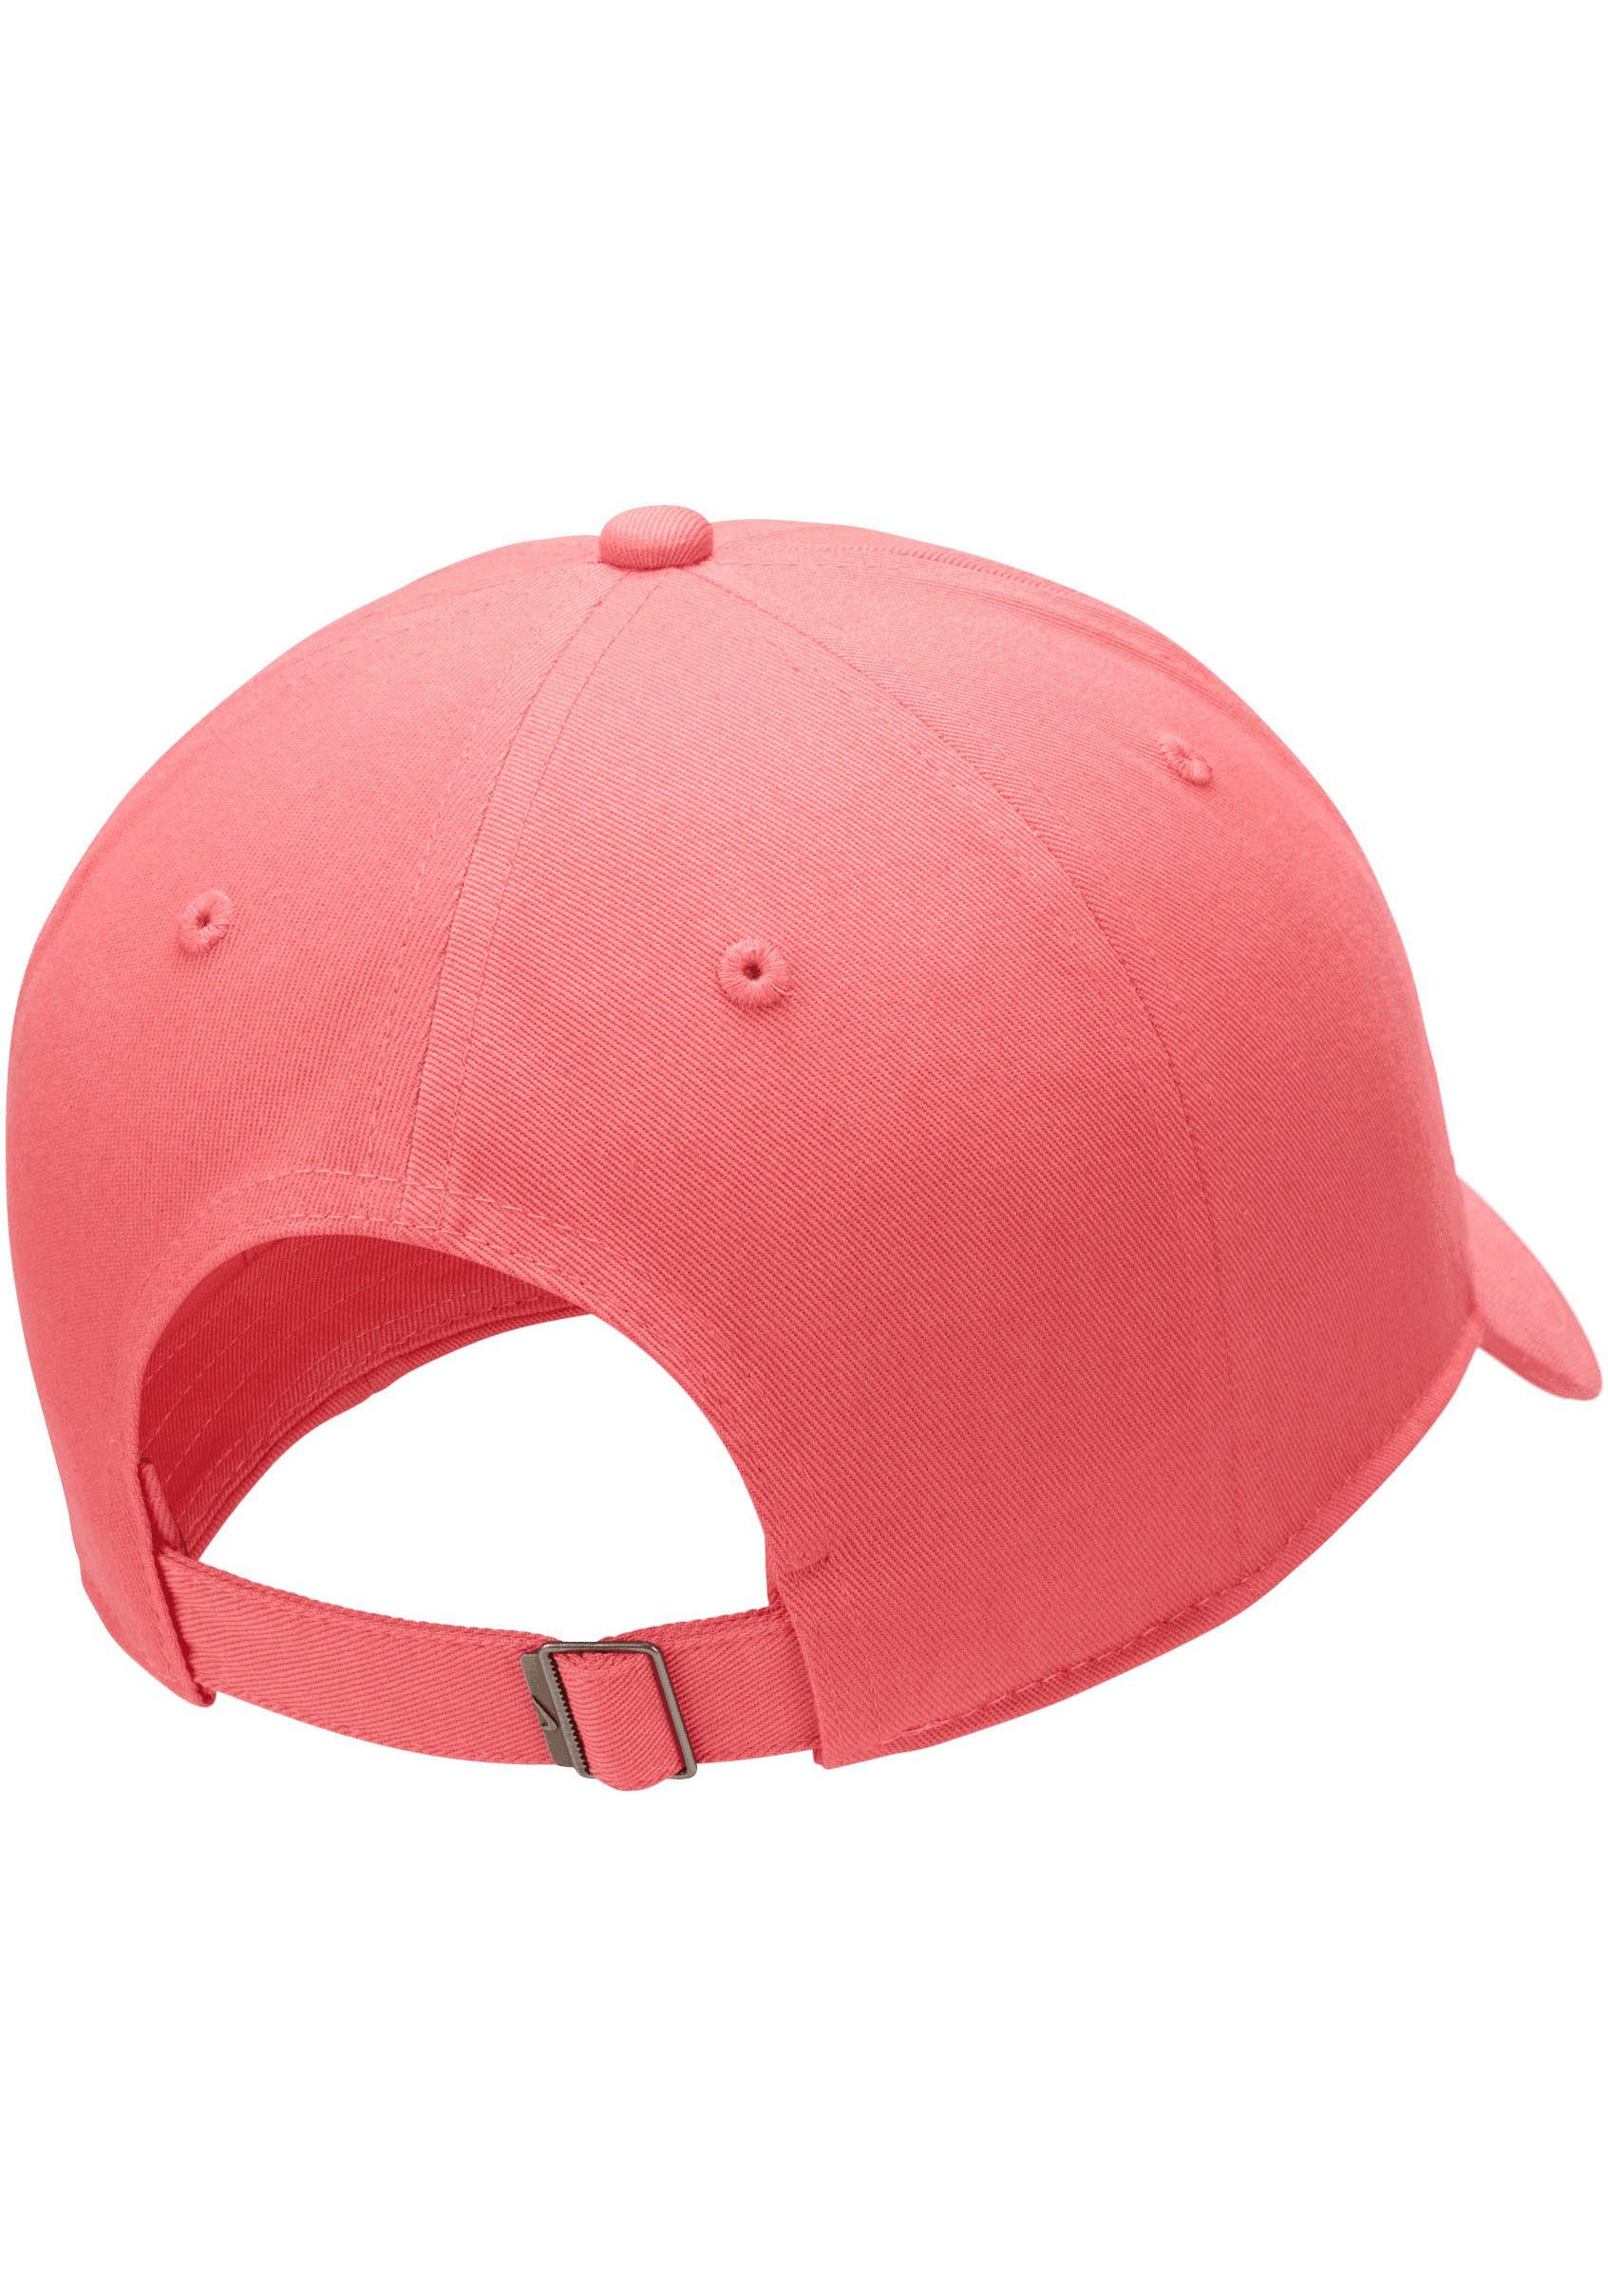 Cap Nike Heritage Sportswear Baseball orange Hat Futura Washed